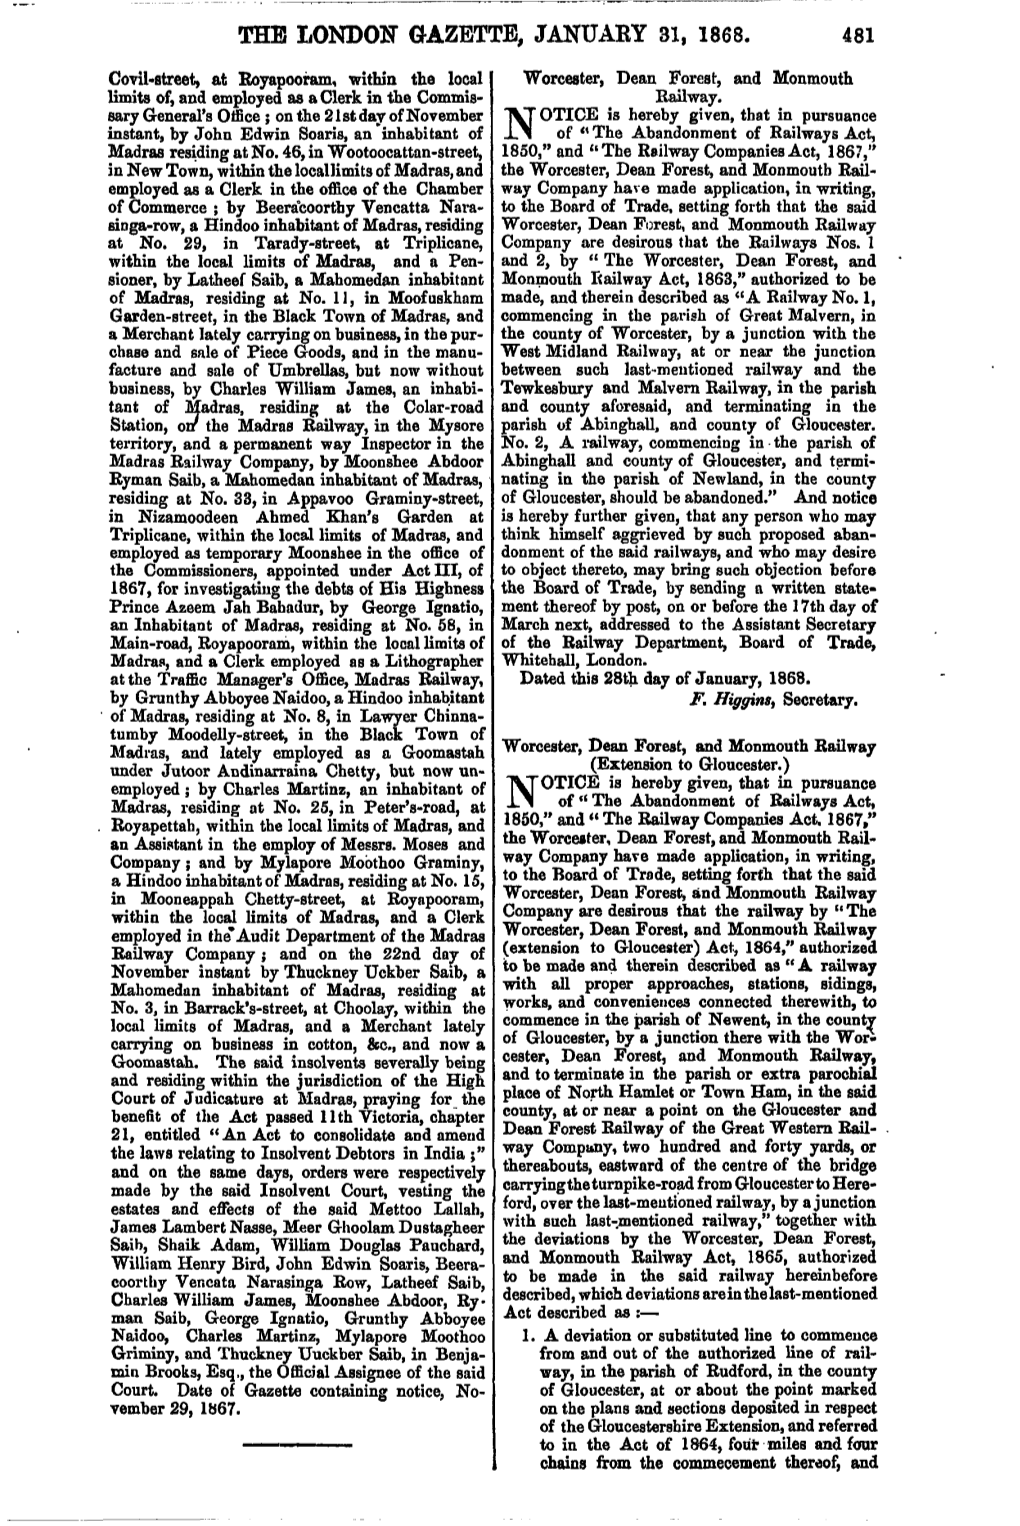 The London Gazette, January 31, 1868. 481